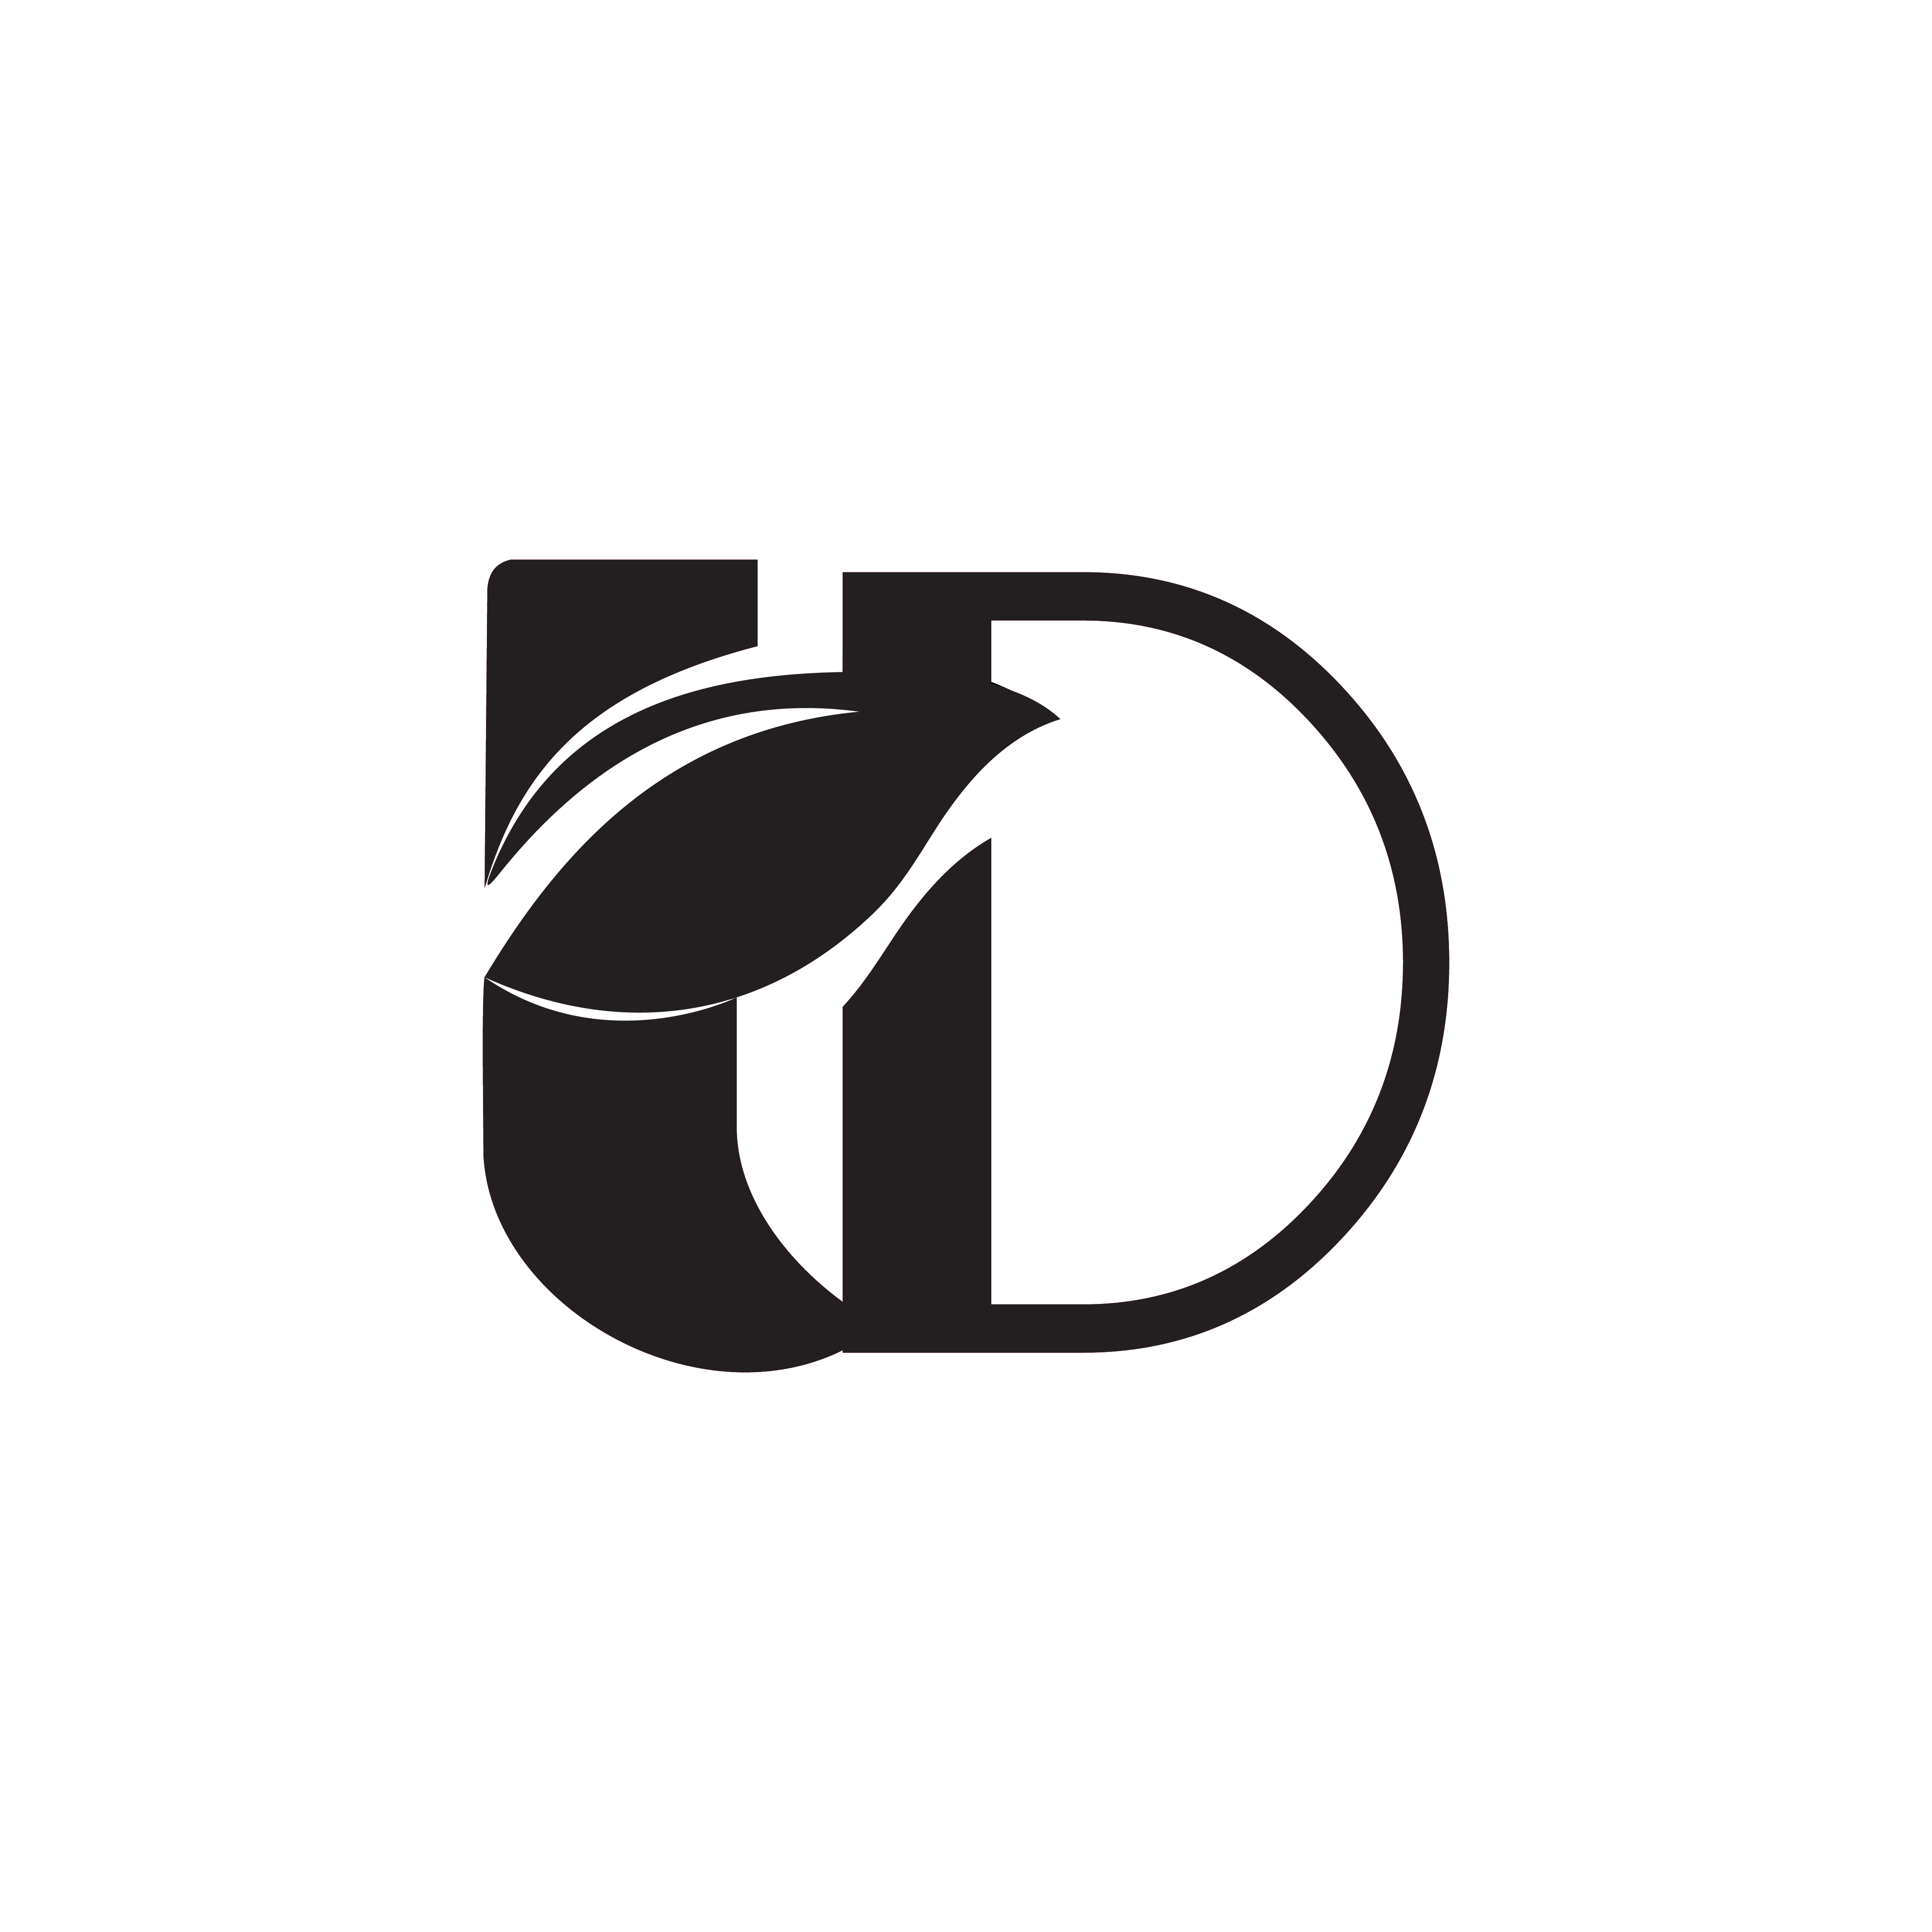 toniderma logo-01